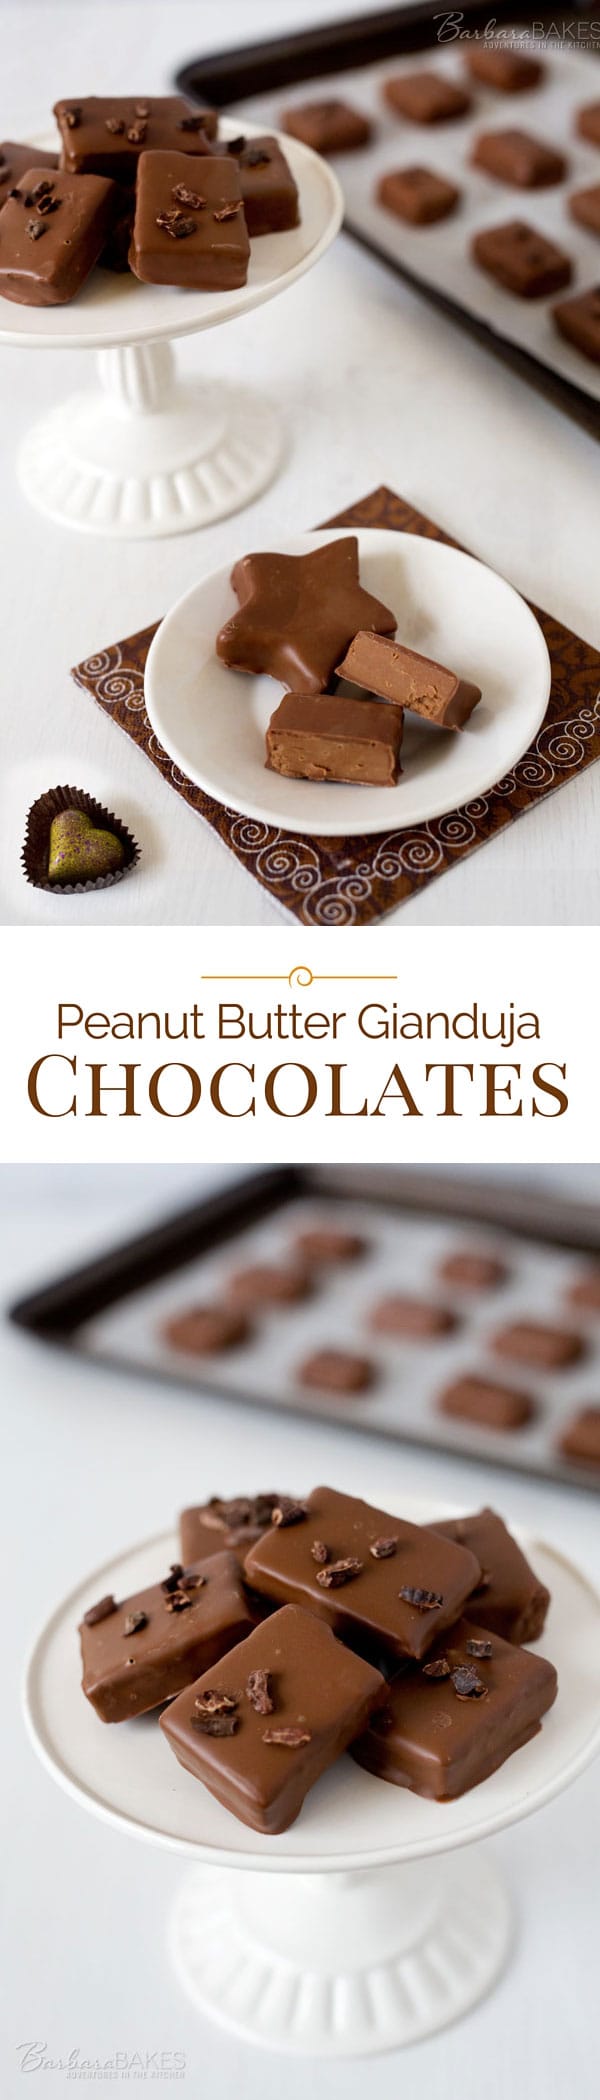 Peanut-Butter-Gianduja-Collage-Barbara-Bake